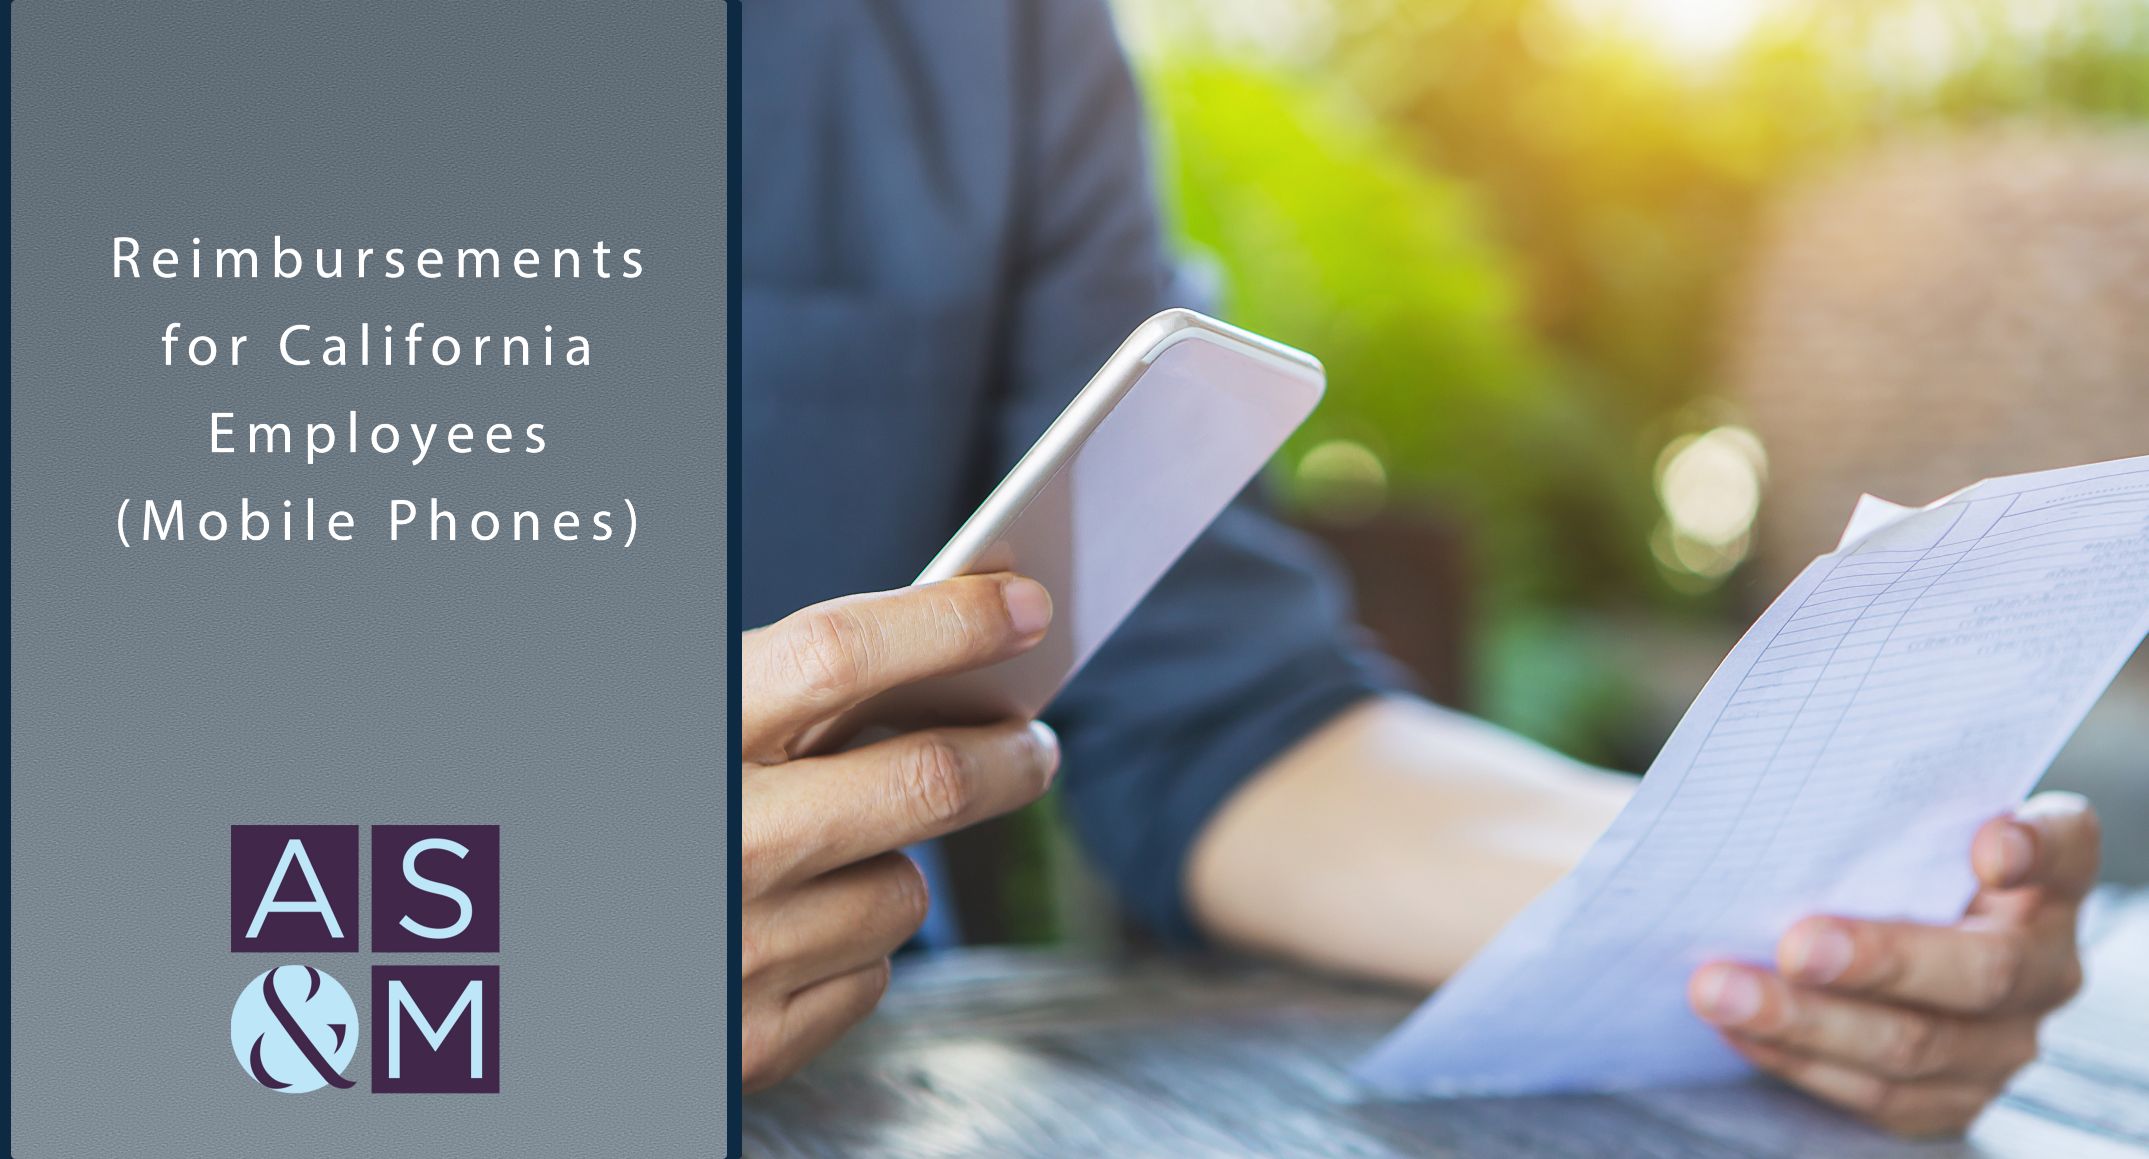 Reimbursements for California Employees (Mobile Phones) AimanSmith